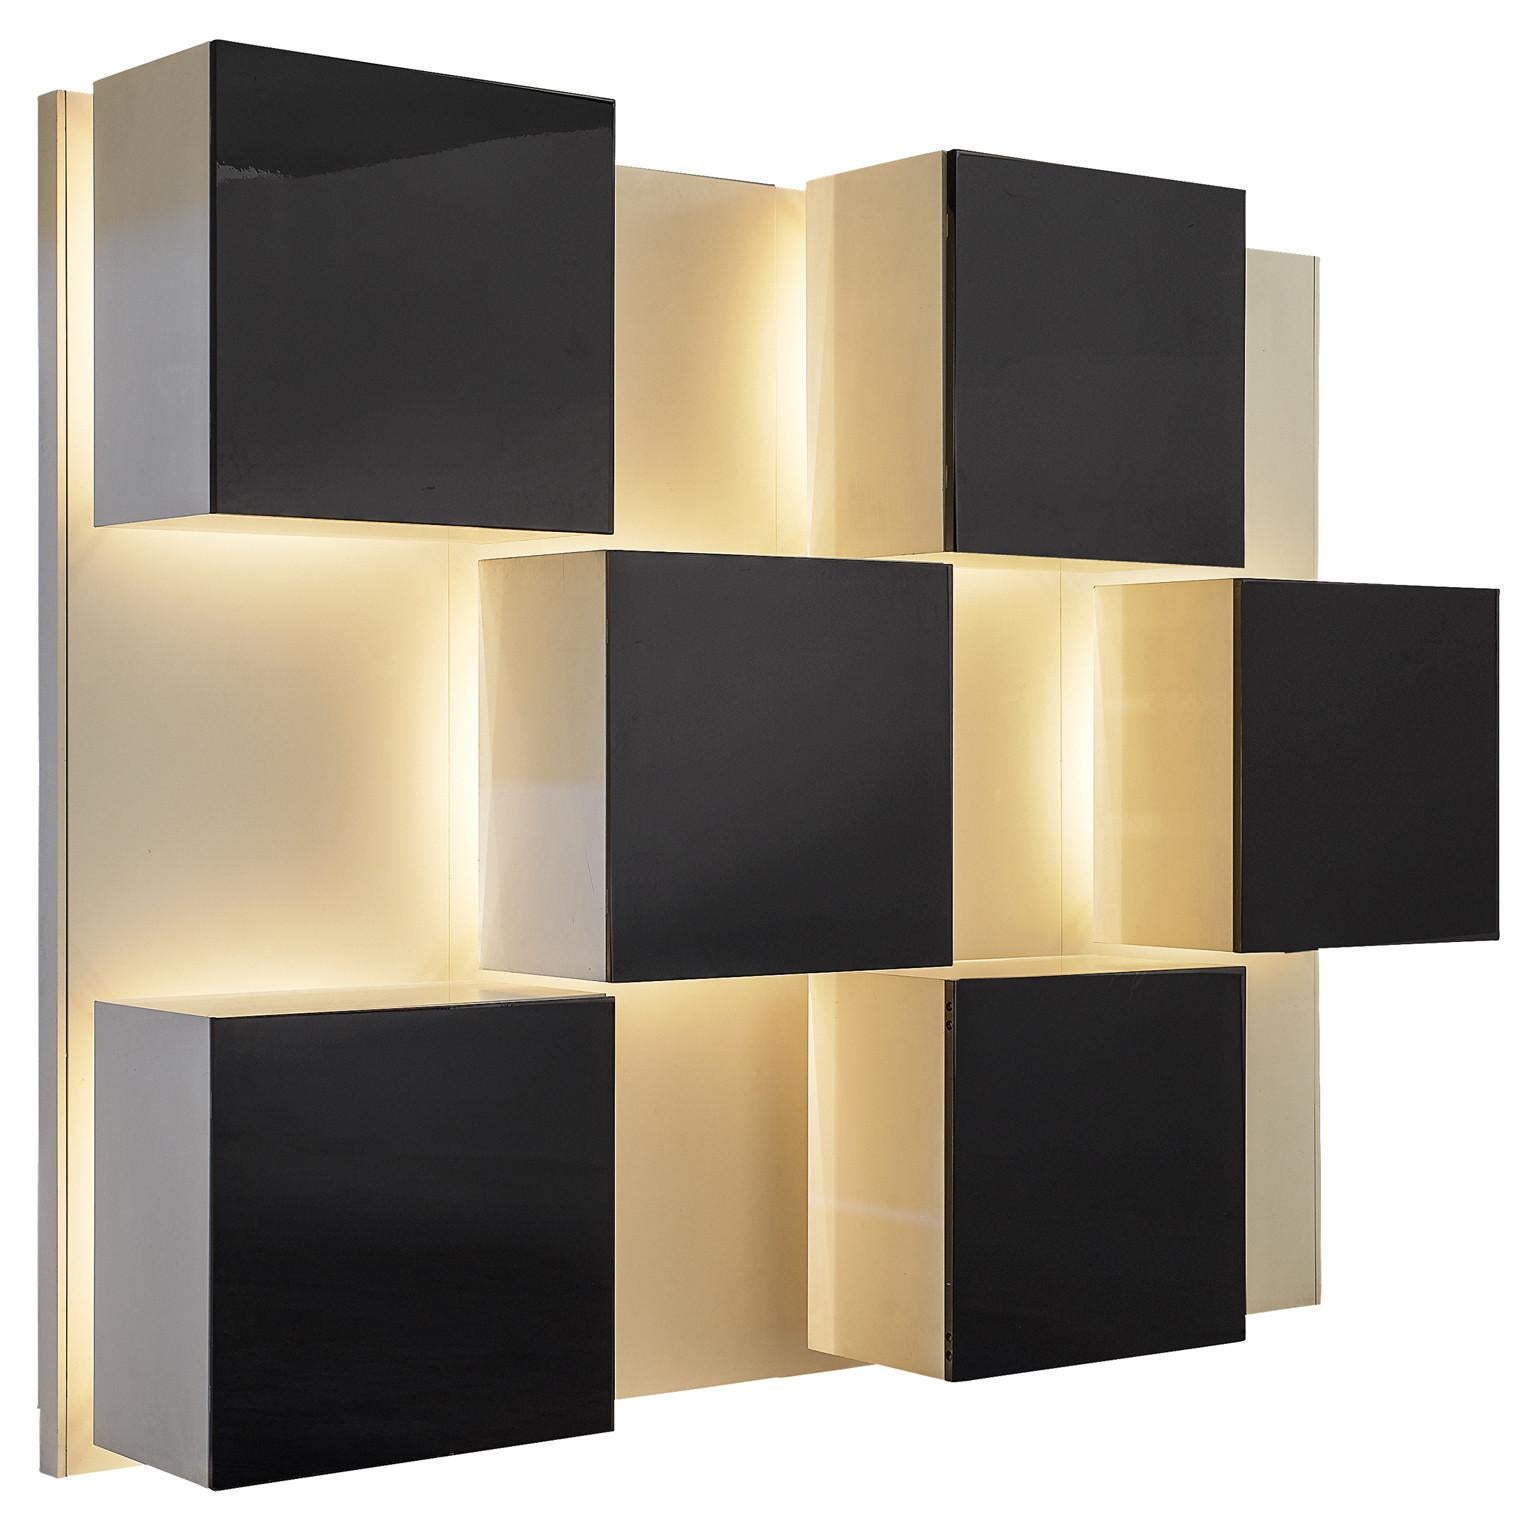 Roberto Monsani for Acerbis Illuminated Wall Unit 